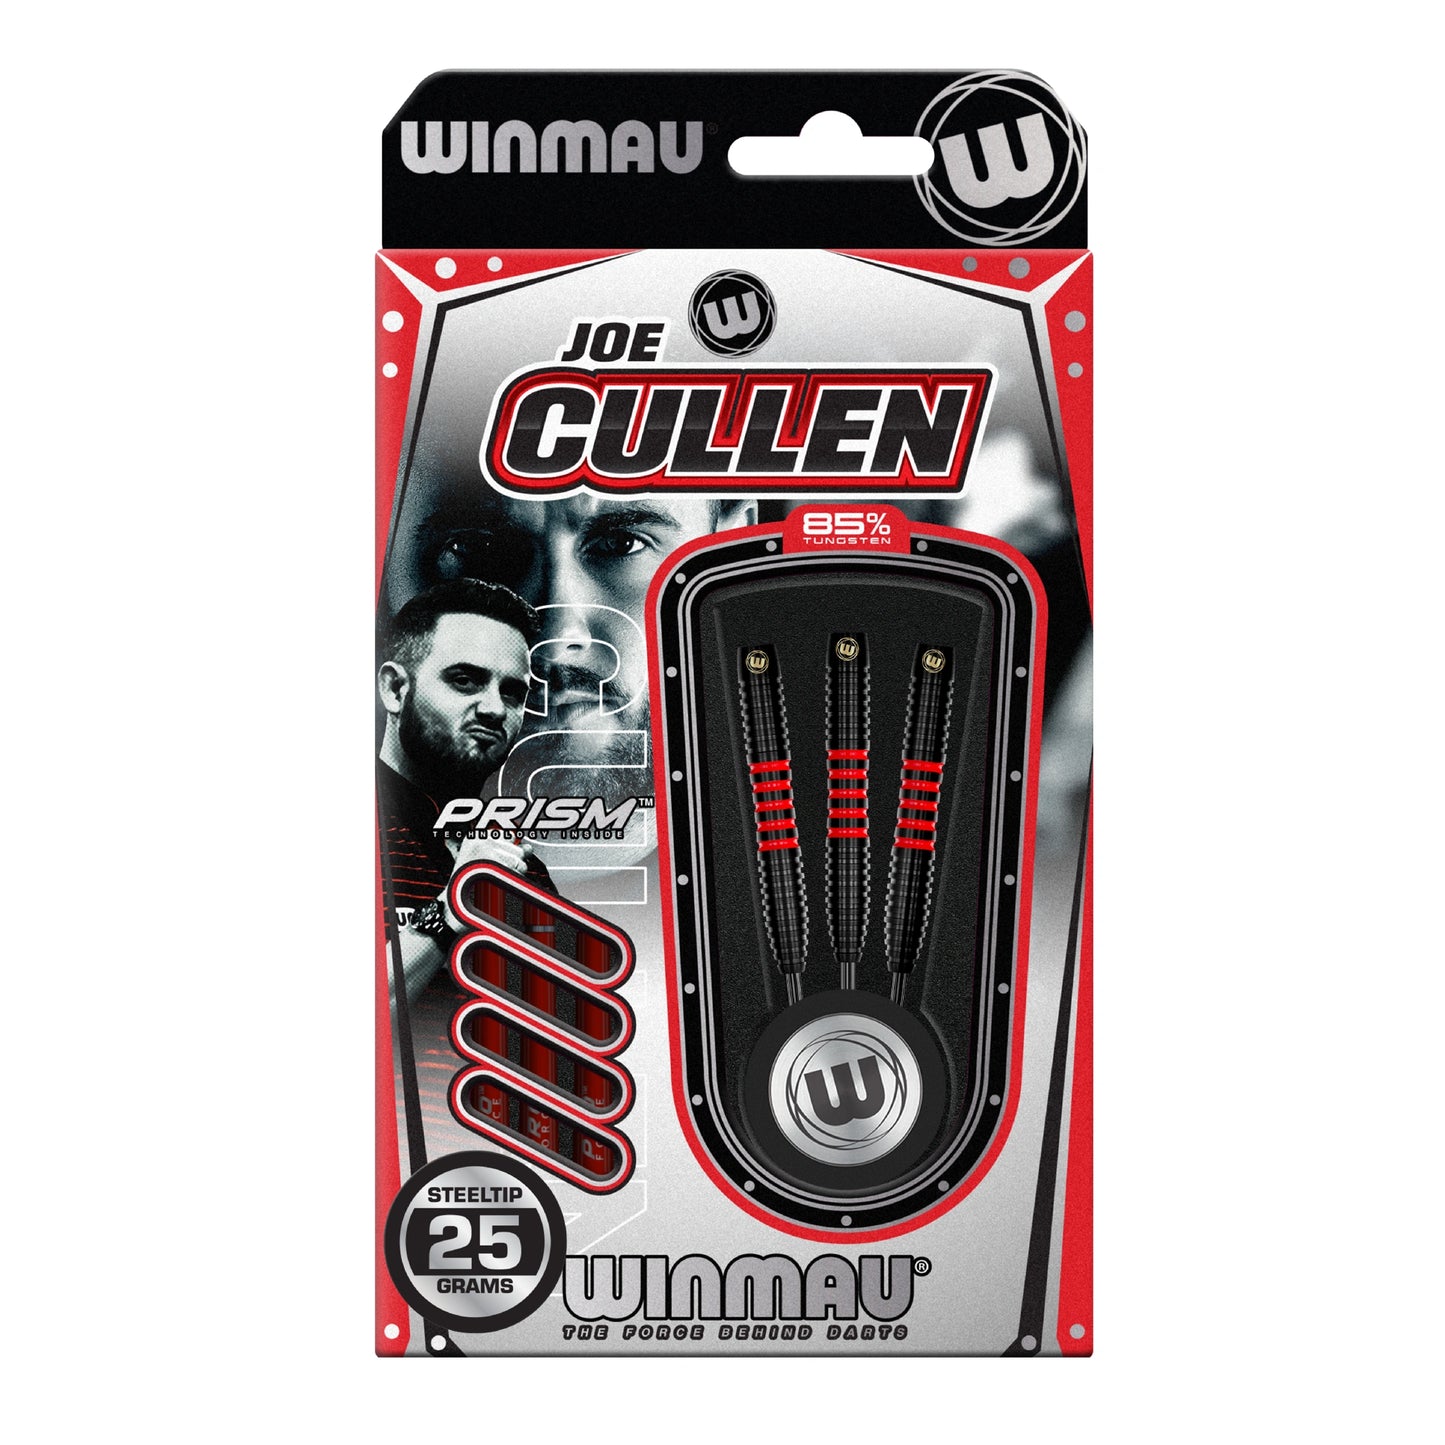 Winmau Joe Cullen 85% Tungsten Darts 25G